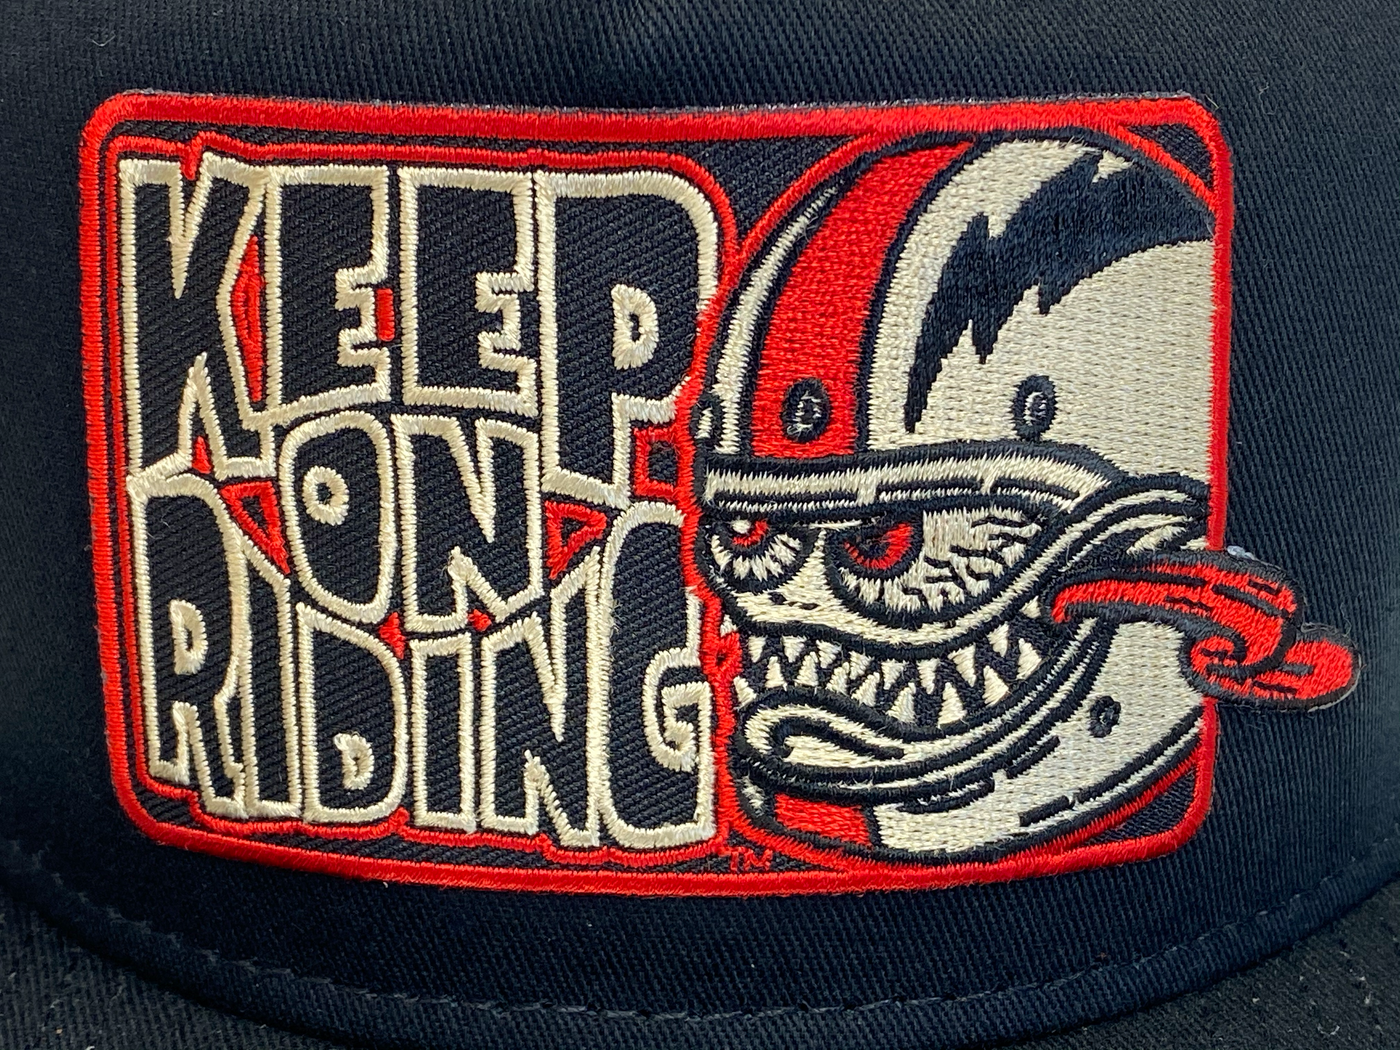 Keep On Riding Bobber Monster Flat Bill Snapback Cap